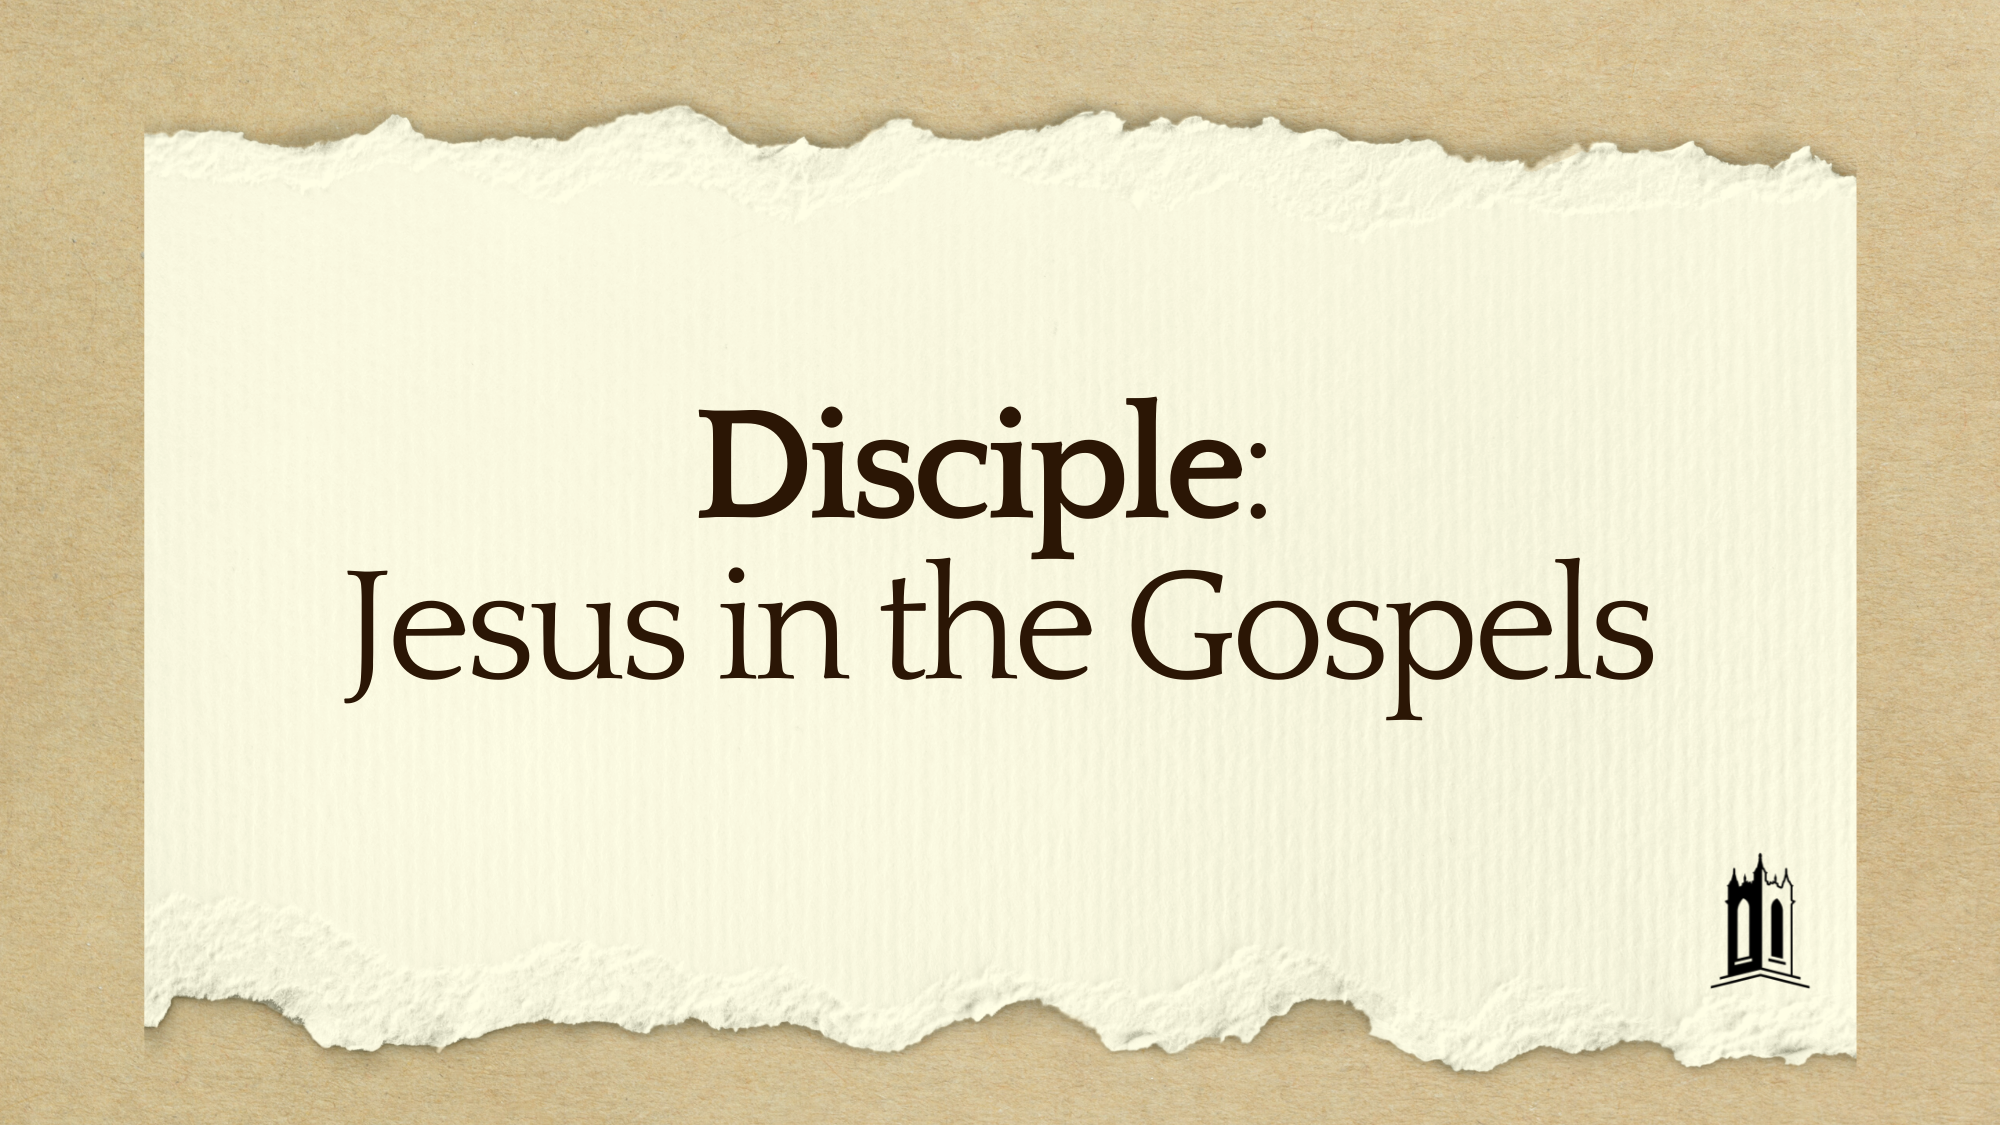 Disciple: Jesus in the Gospels